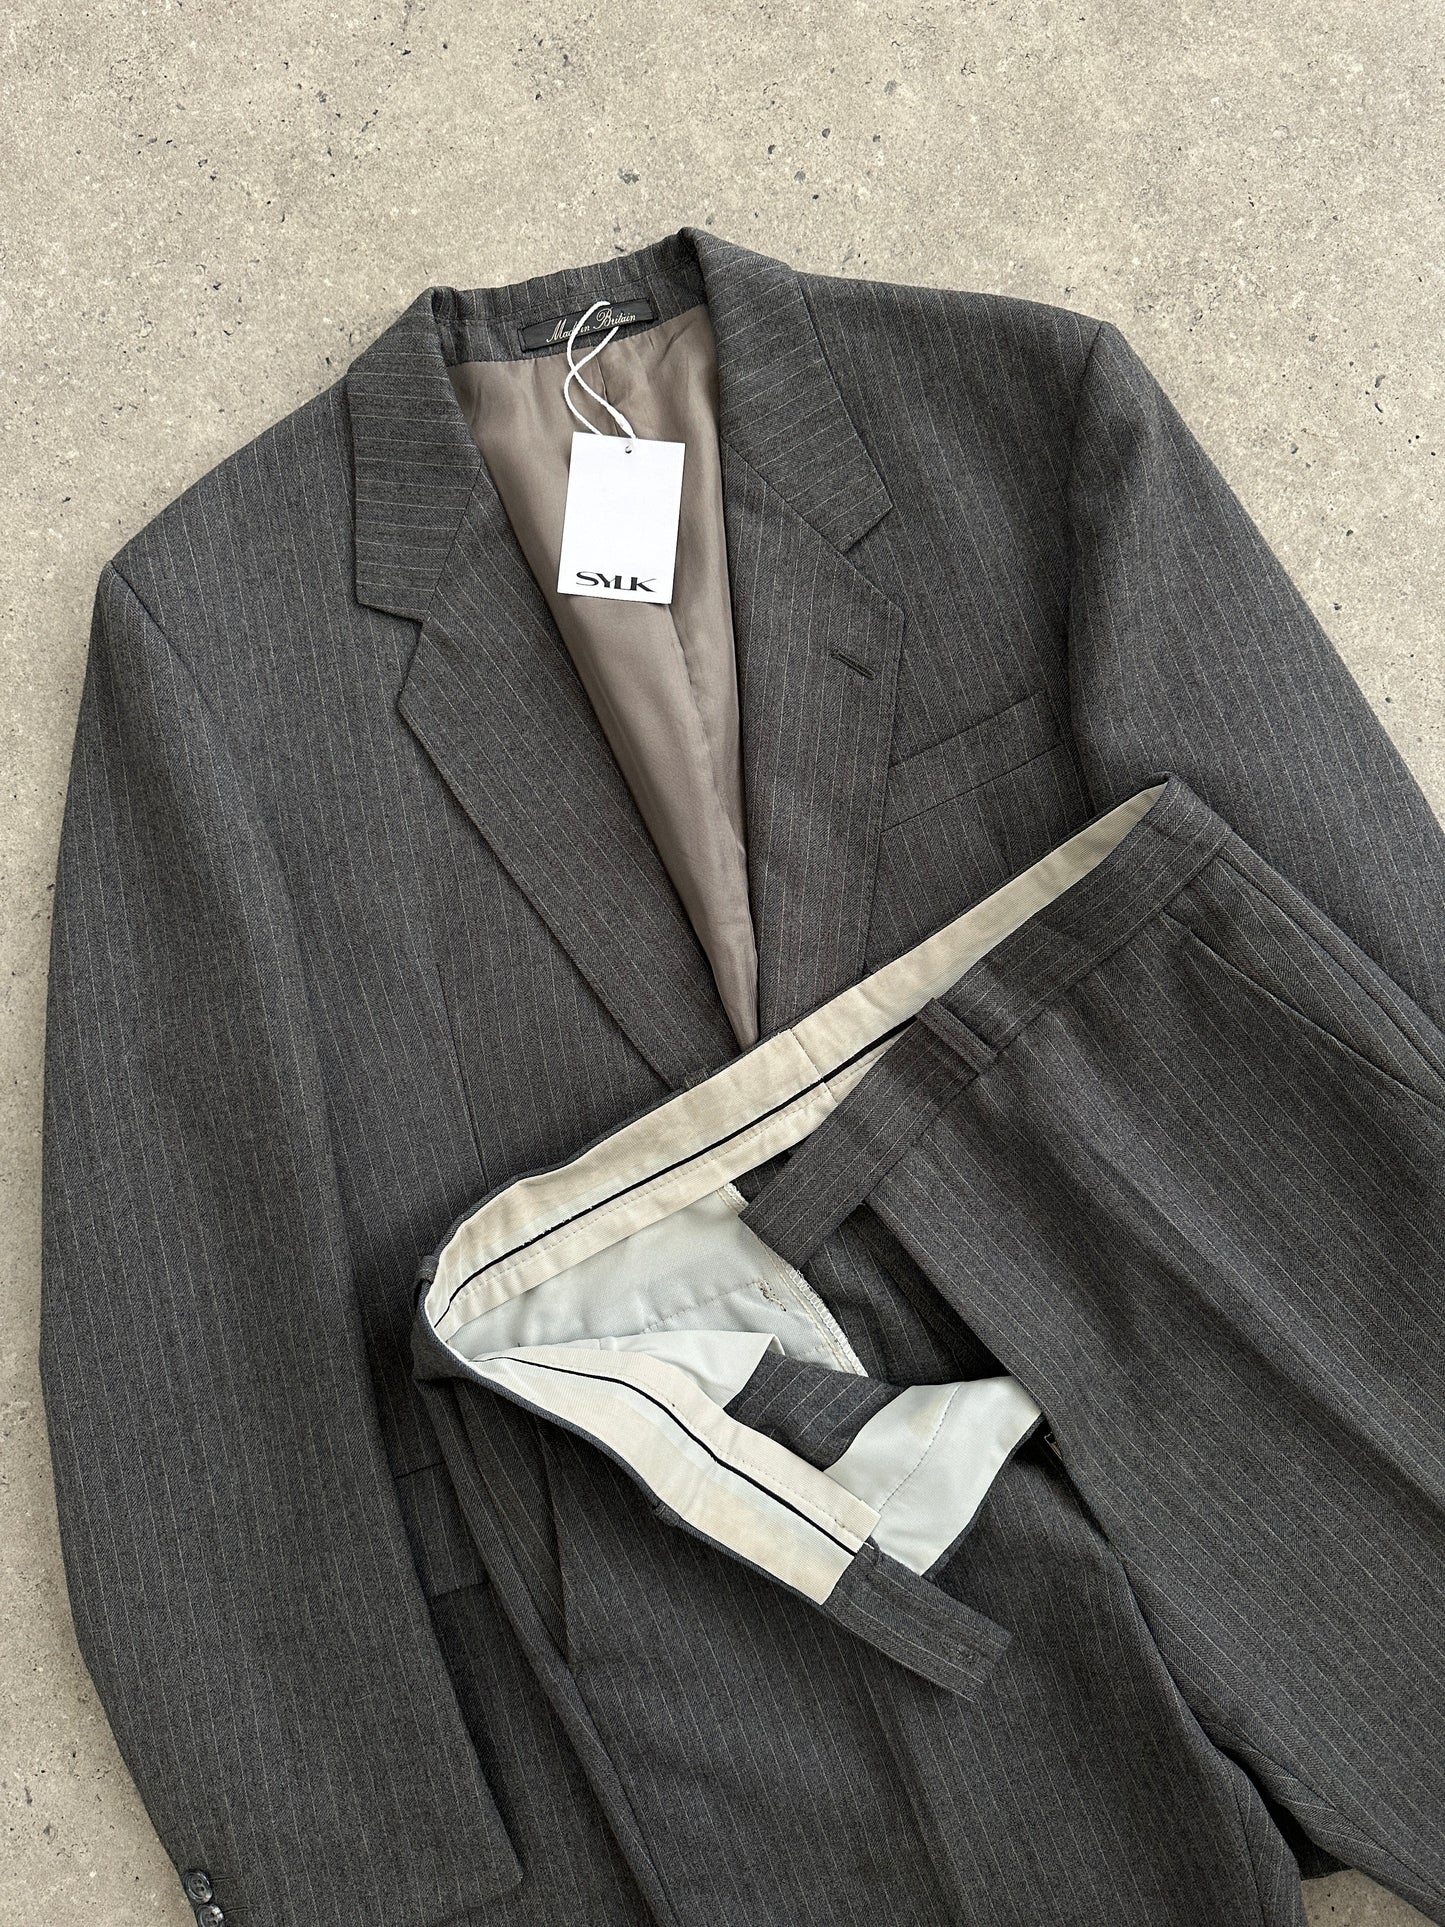 British Vintage Pinstripe New Wool Single Breasted Suit - 42R/W32